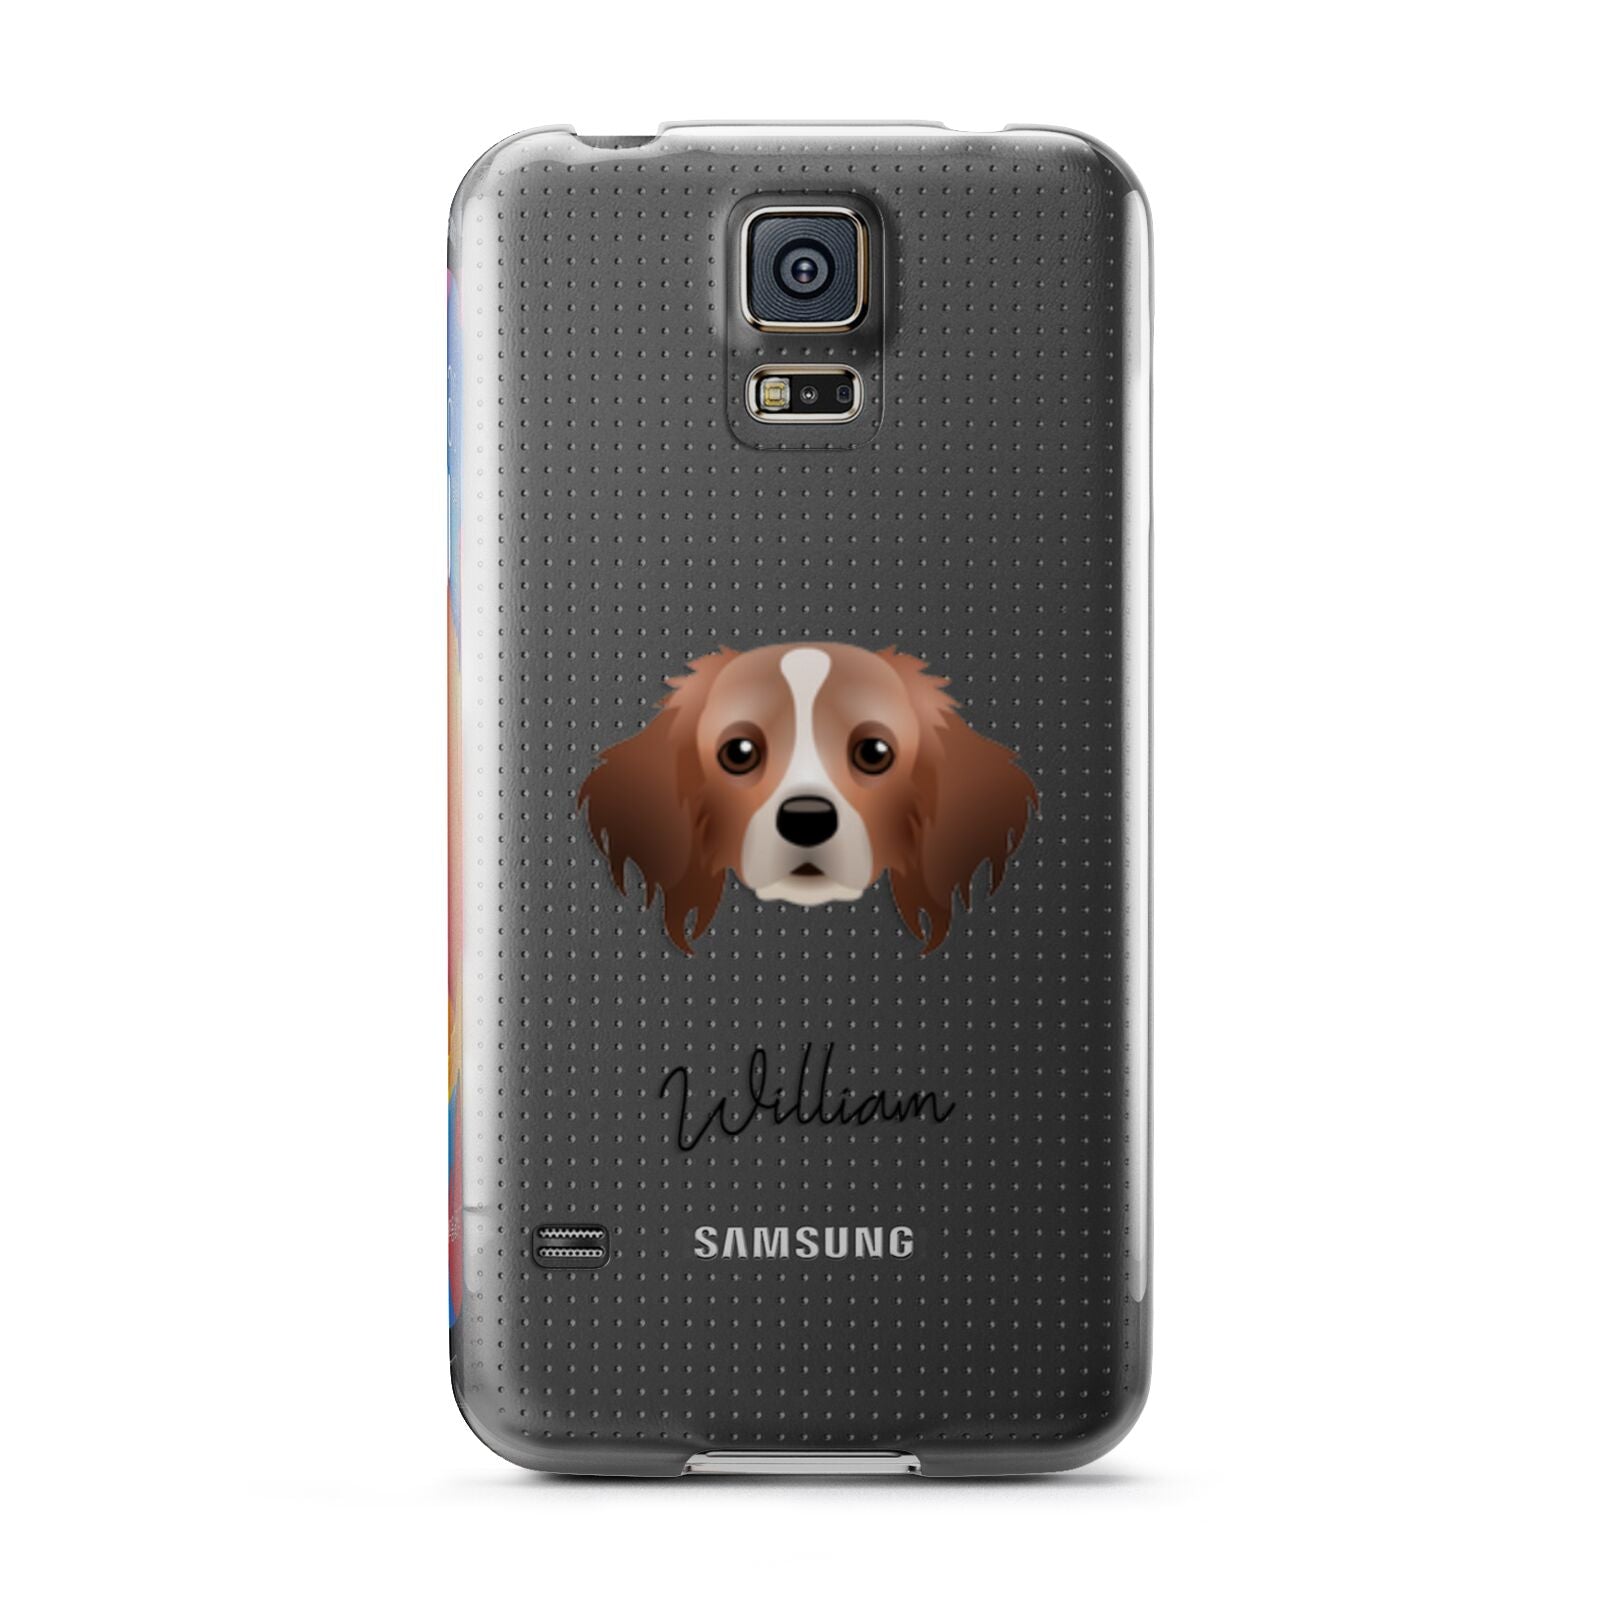 Cavapom Personalised Samsung Galaxy S5 Case